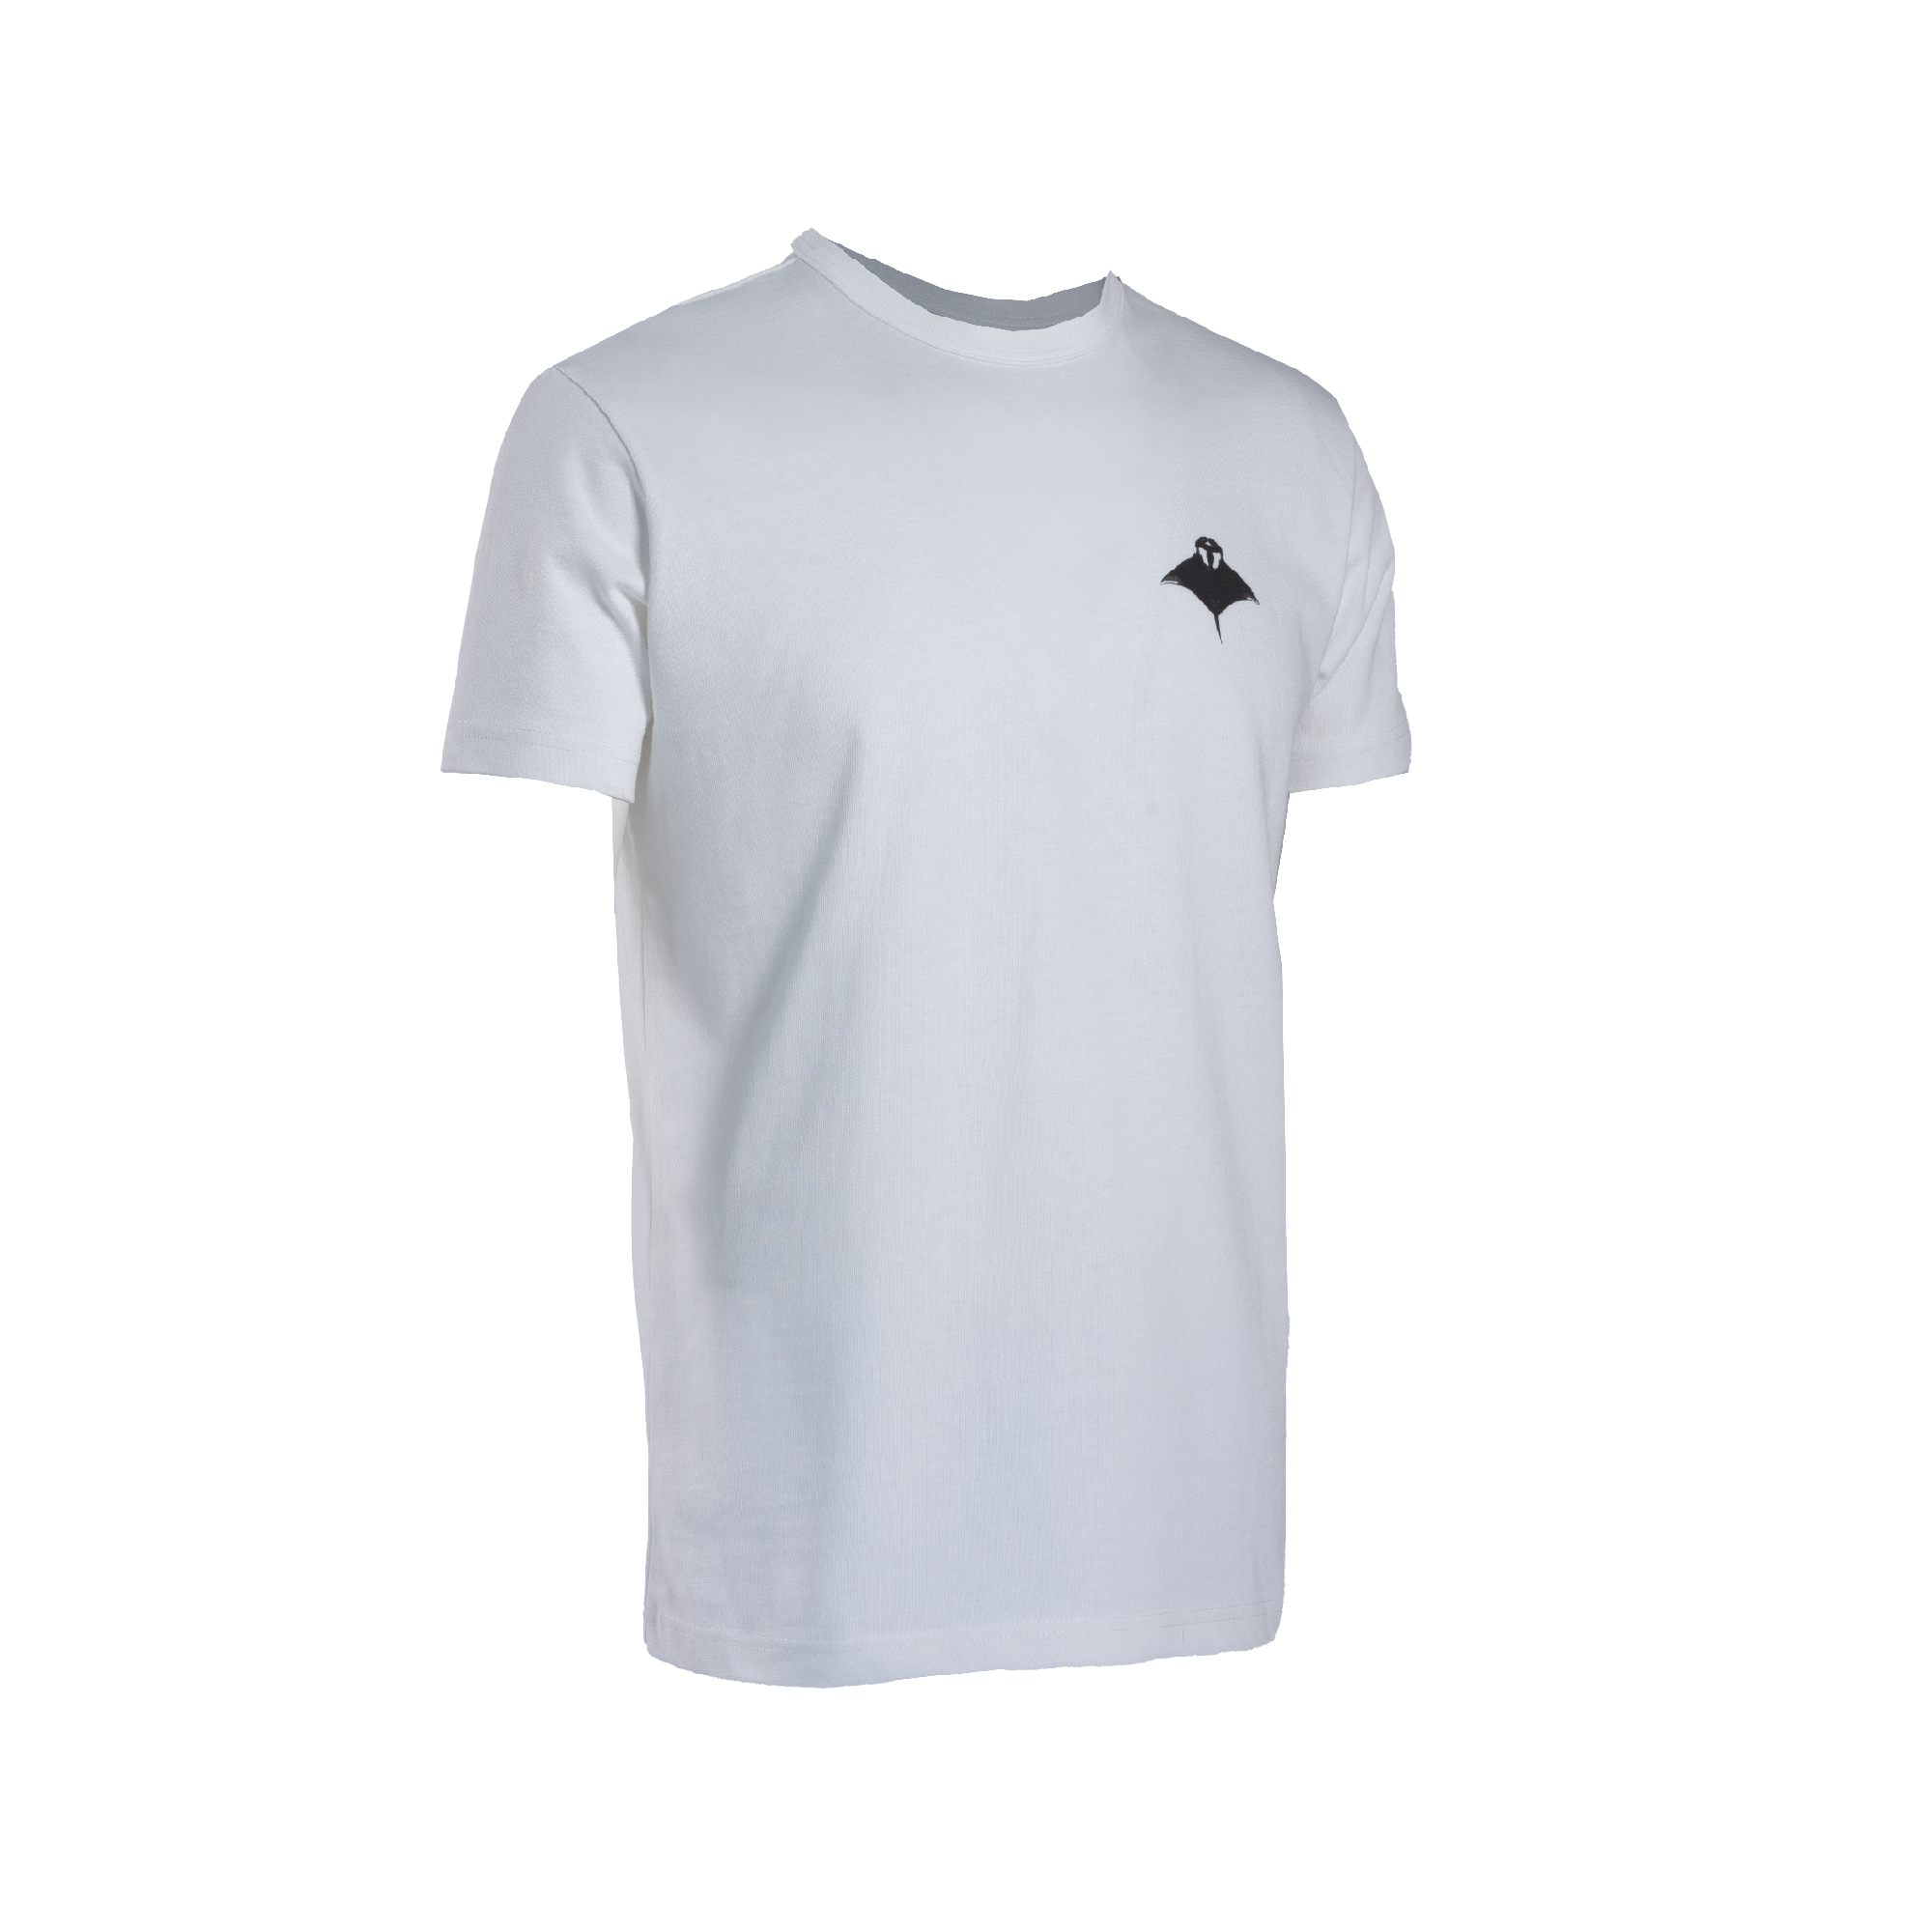 Graphite Short Sleeve Crew Neck T-Shirt Manta Patterned